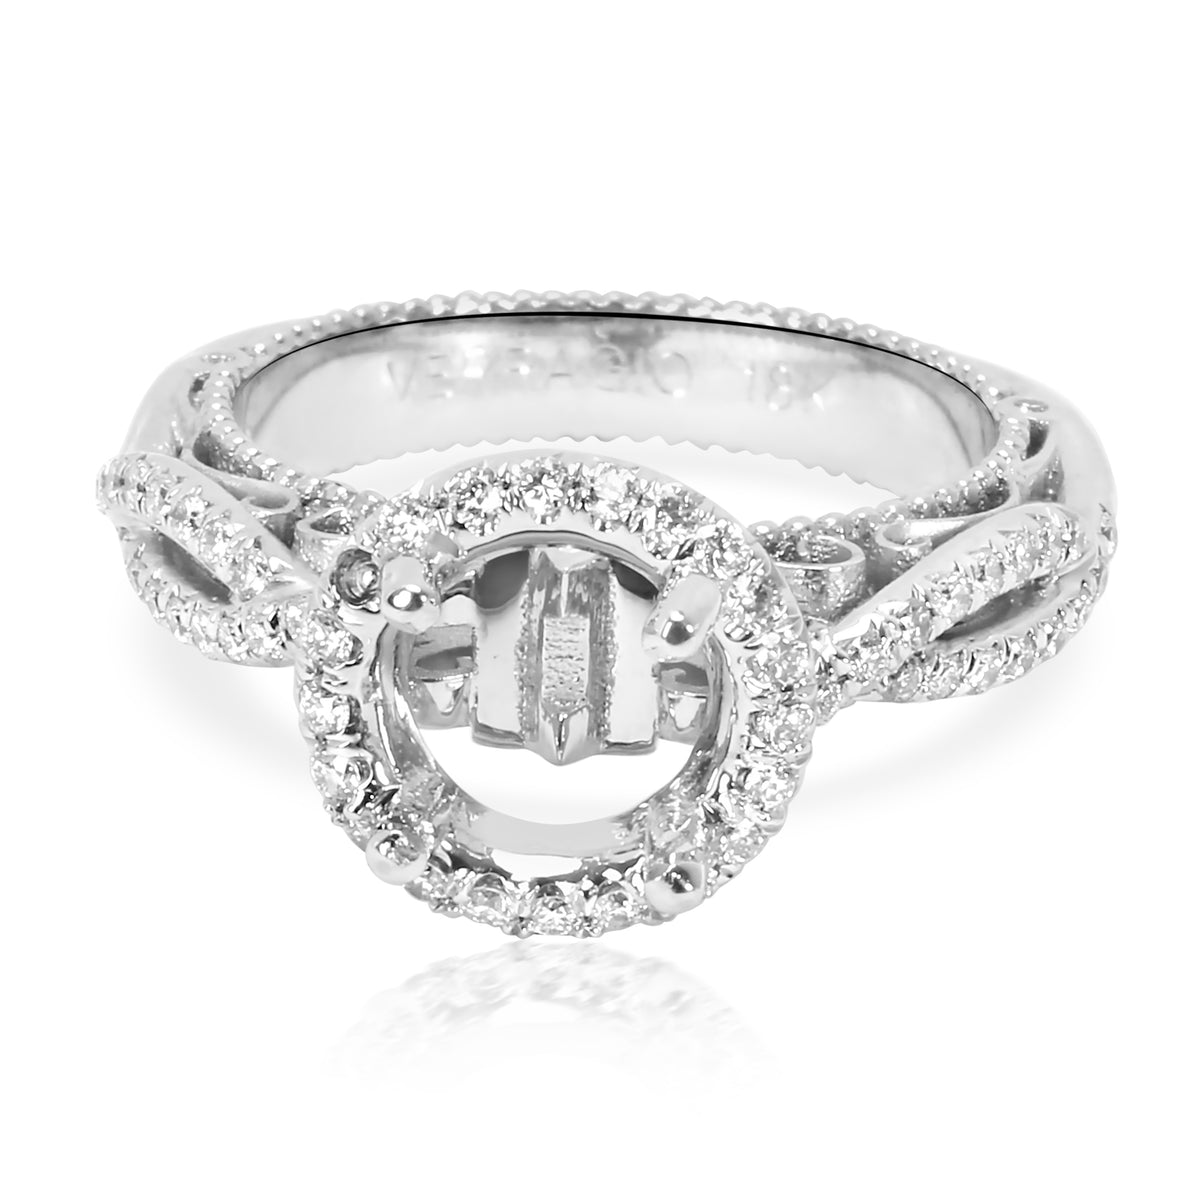 Verragio Venetian Collection Diamond Engagement Ring Setting in 18K White Gold